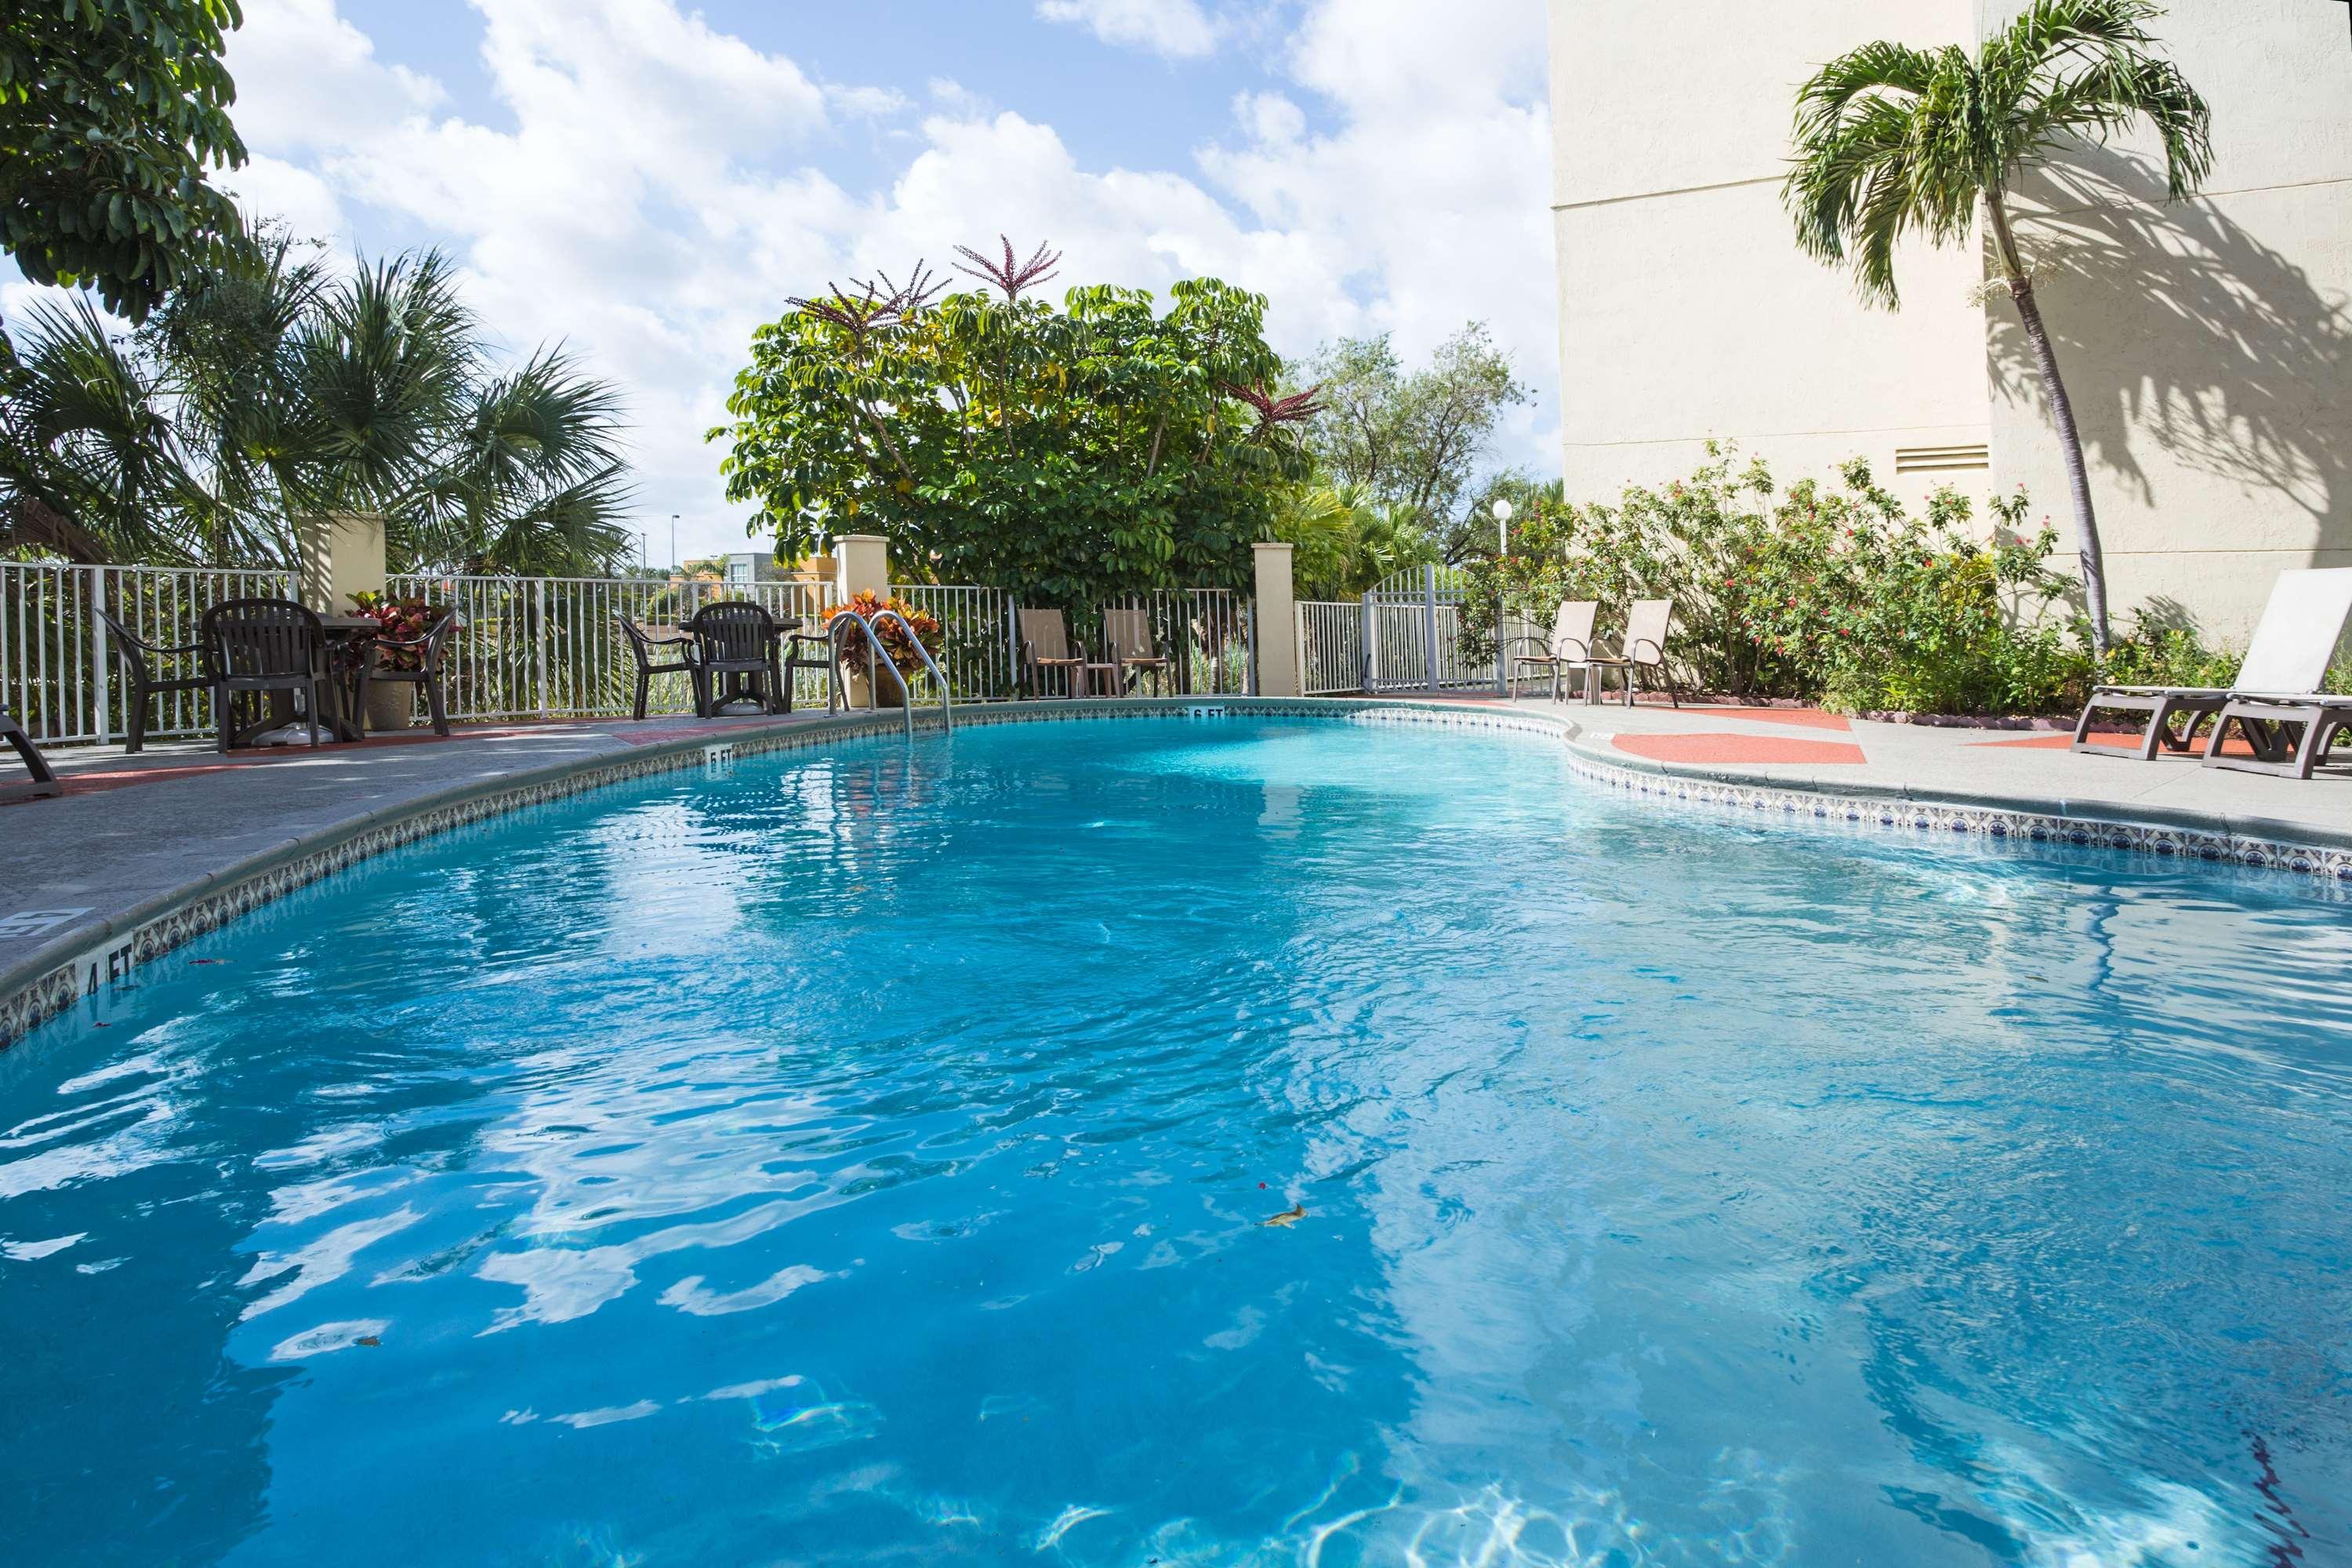 The Palms Inn & Suites Miami, Kendall, Fl 외부 사진